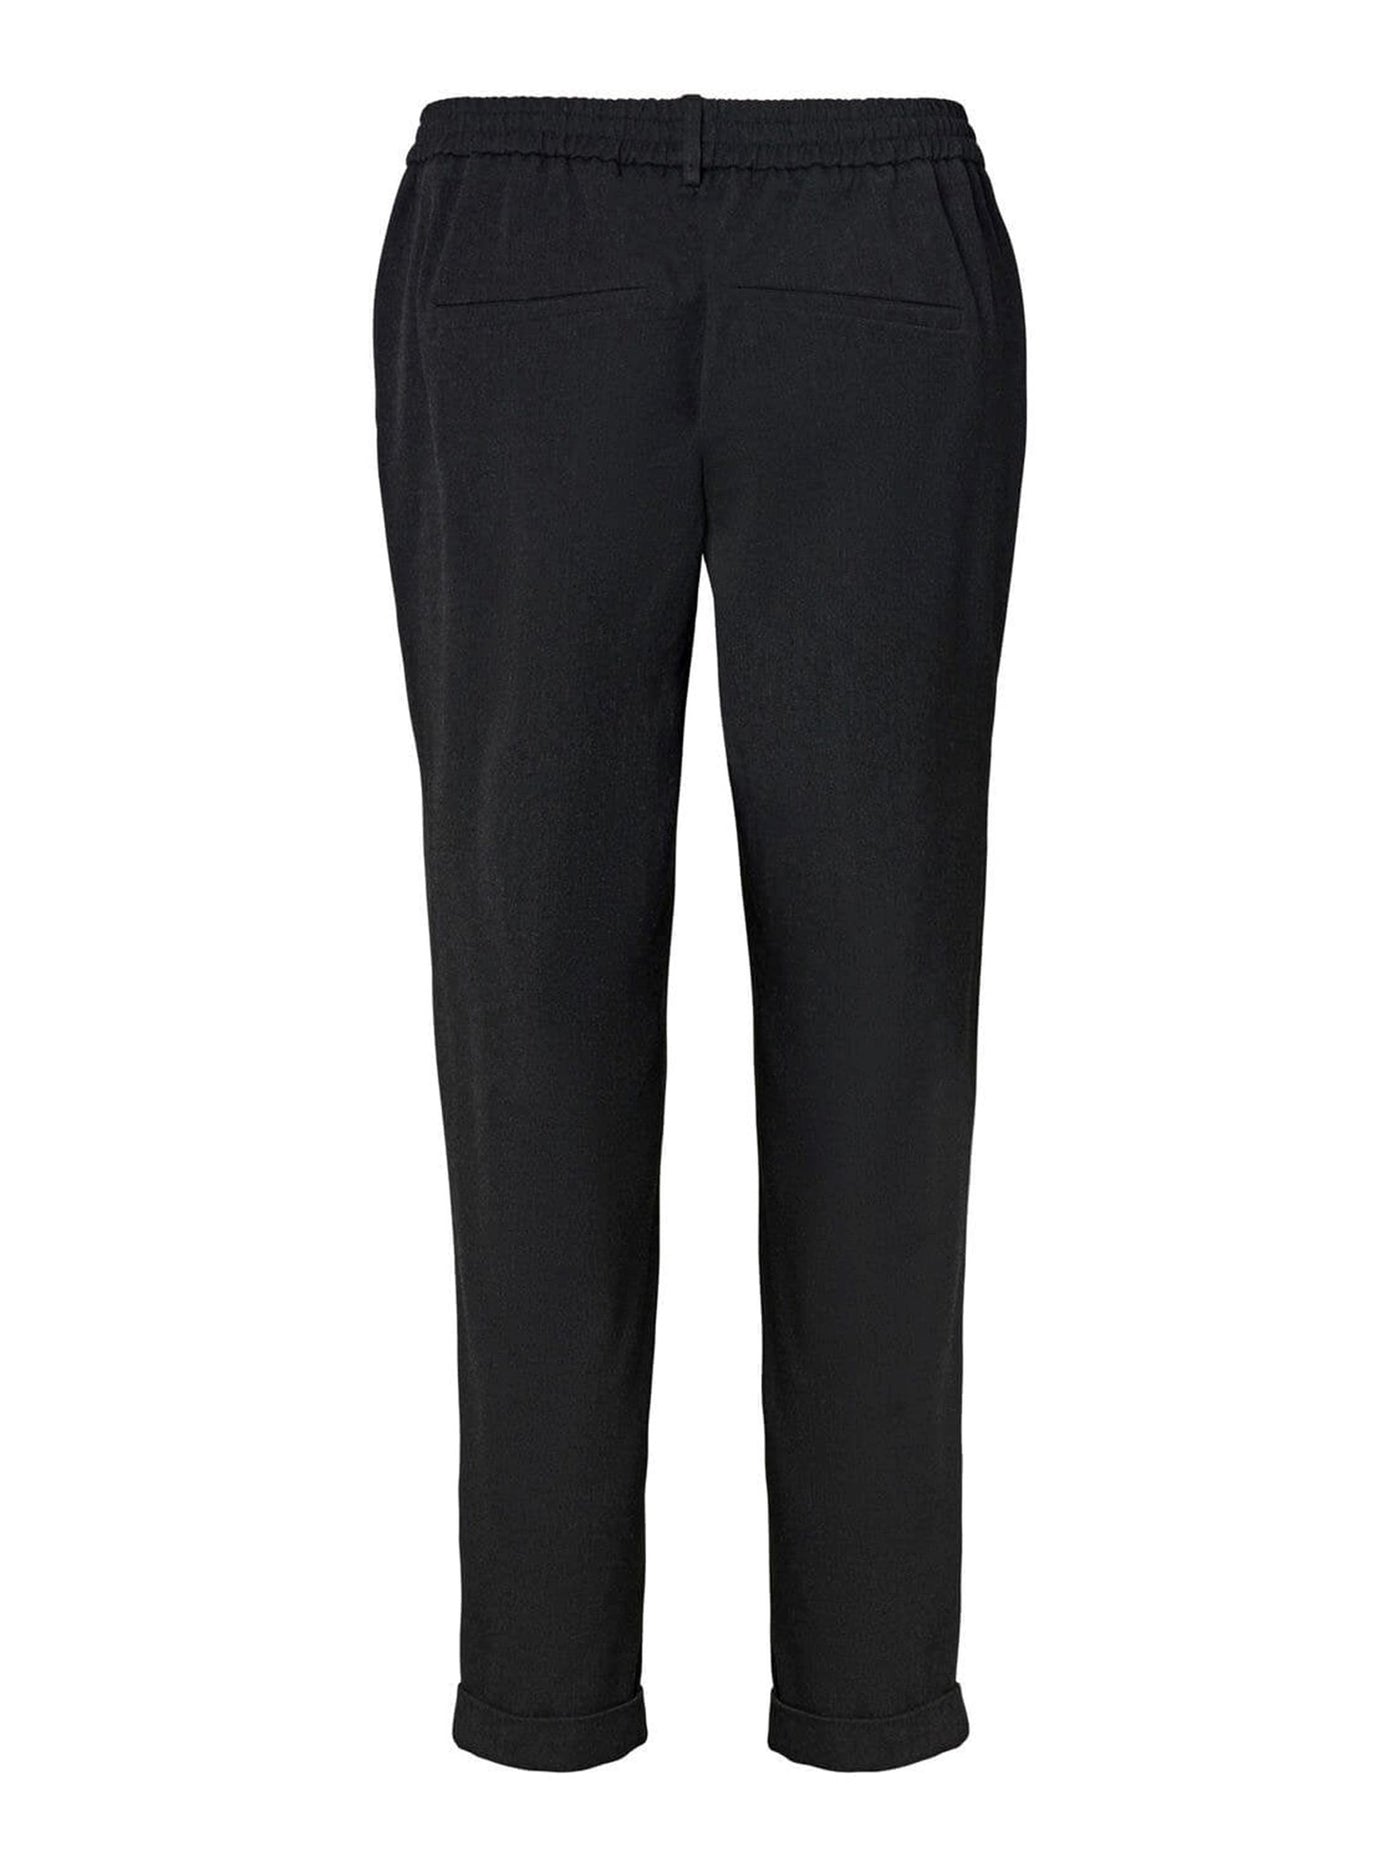 Maya Trousers (wide model) - Dark Grey - Vero Moda - Grey 3